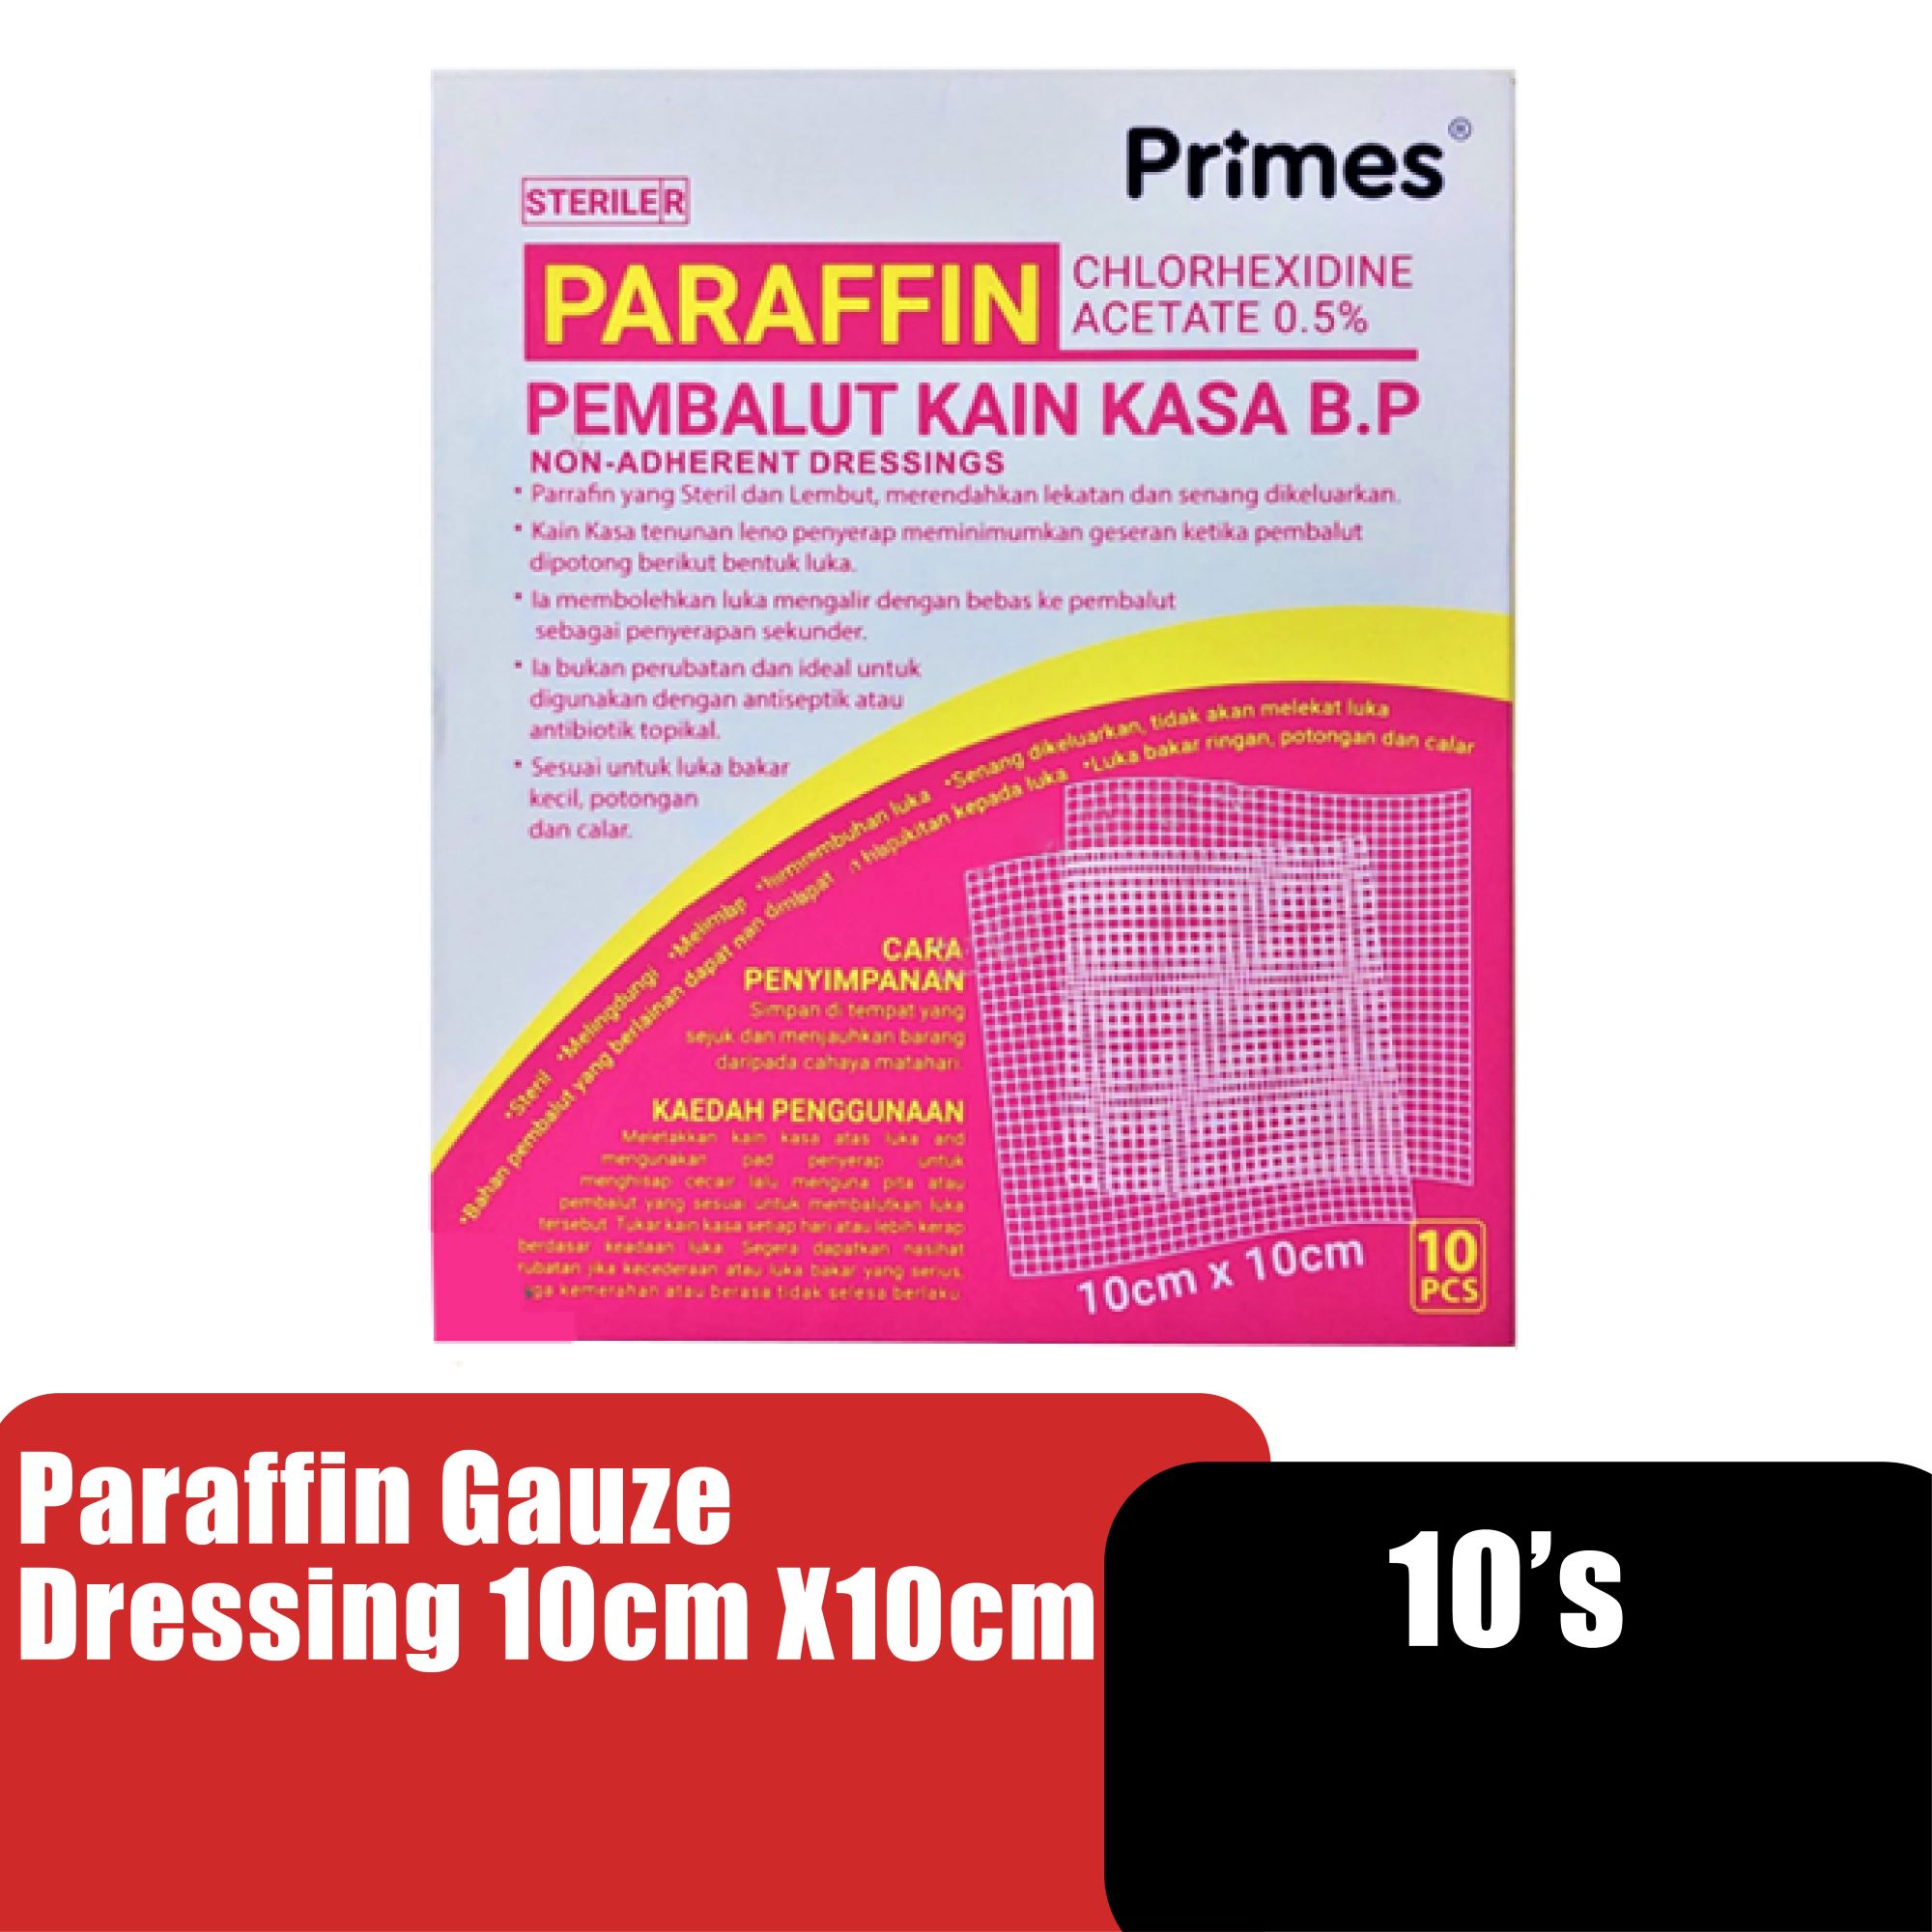 PRIMES PARAFFIN GAUZE DRESSING 10CM X 10CM 10'S